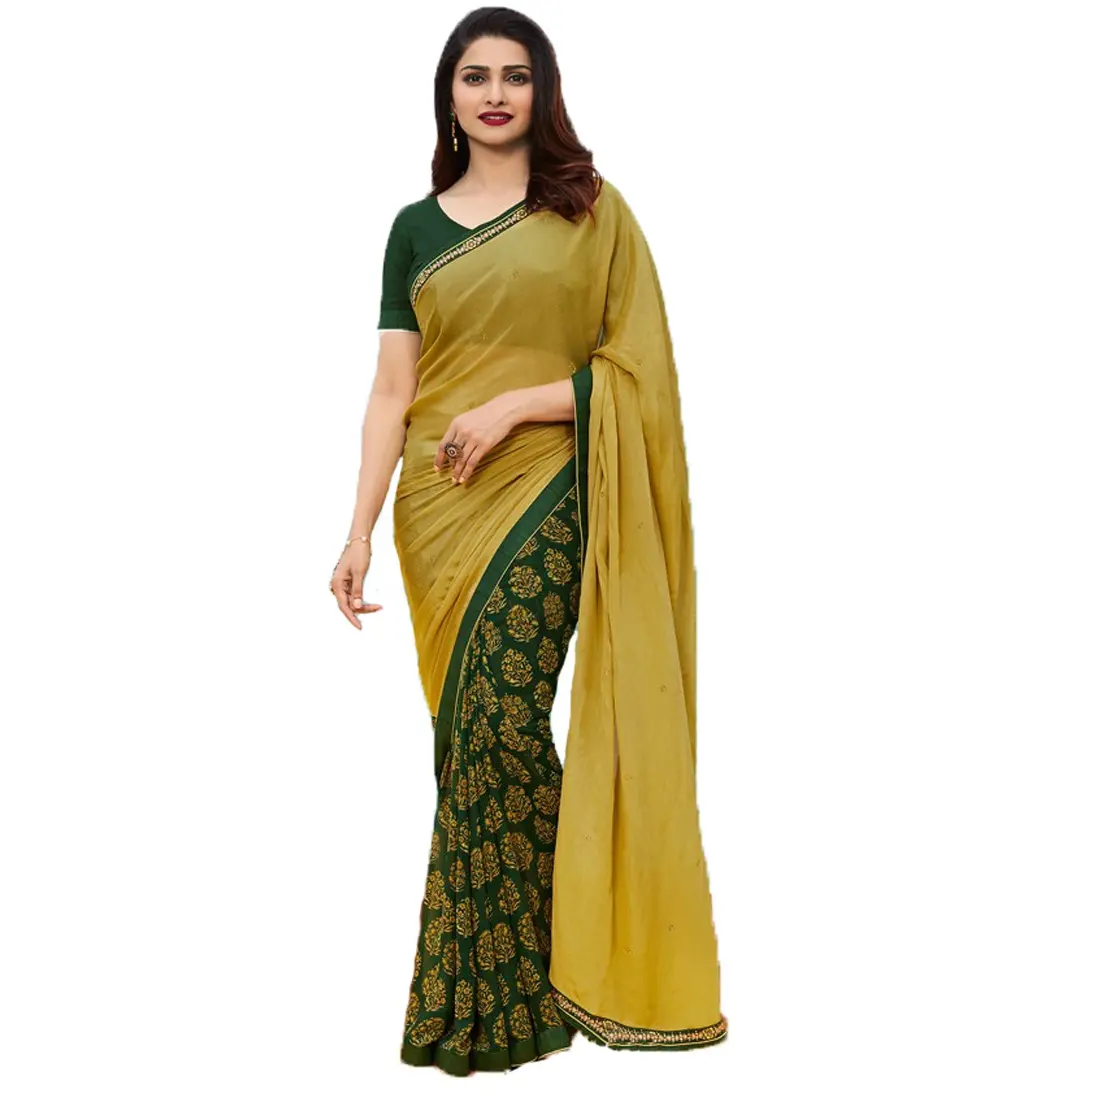 Indian Trending bellissimo Designer Saree Faux Georgette Digital Print sari da lavoro per le donne Party e Wedding Wear all'ingrosso